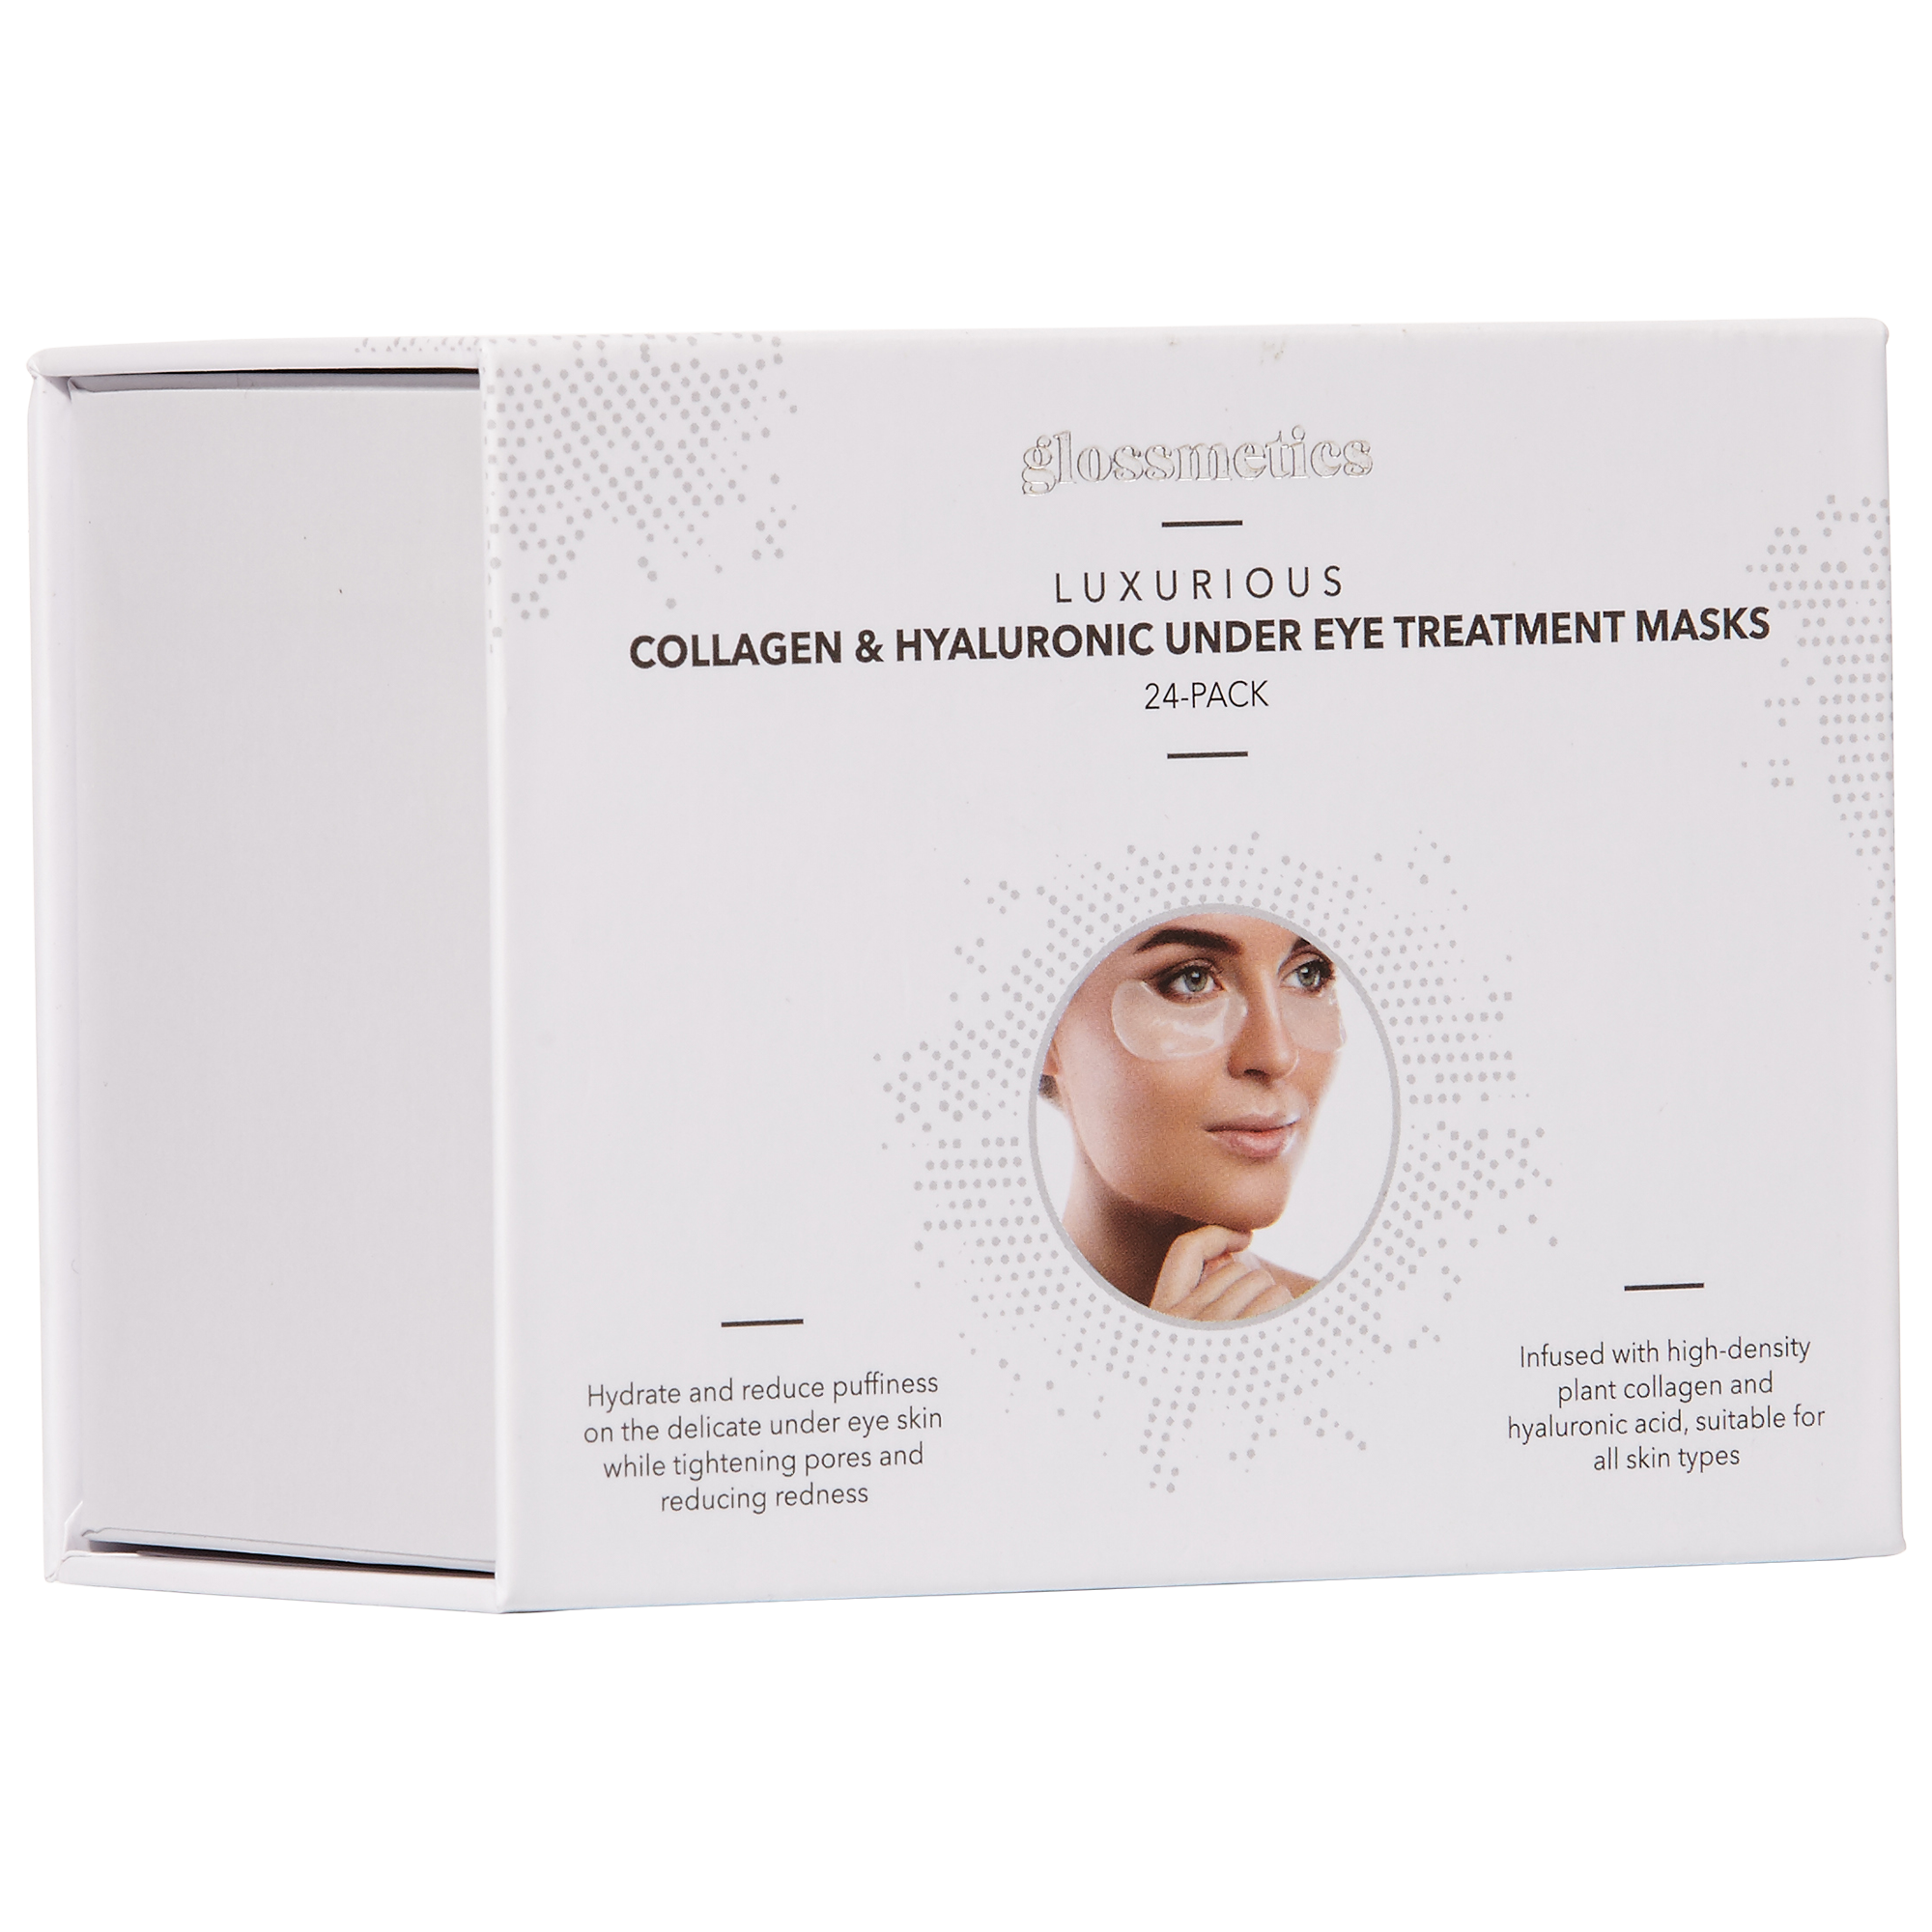 Luxurious Collagen & Hyaluronic Acid Under-Eye Treatment Masks - 24-Pack